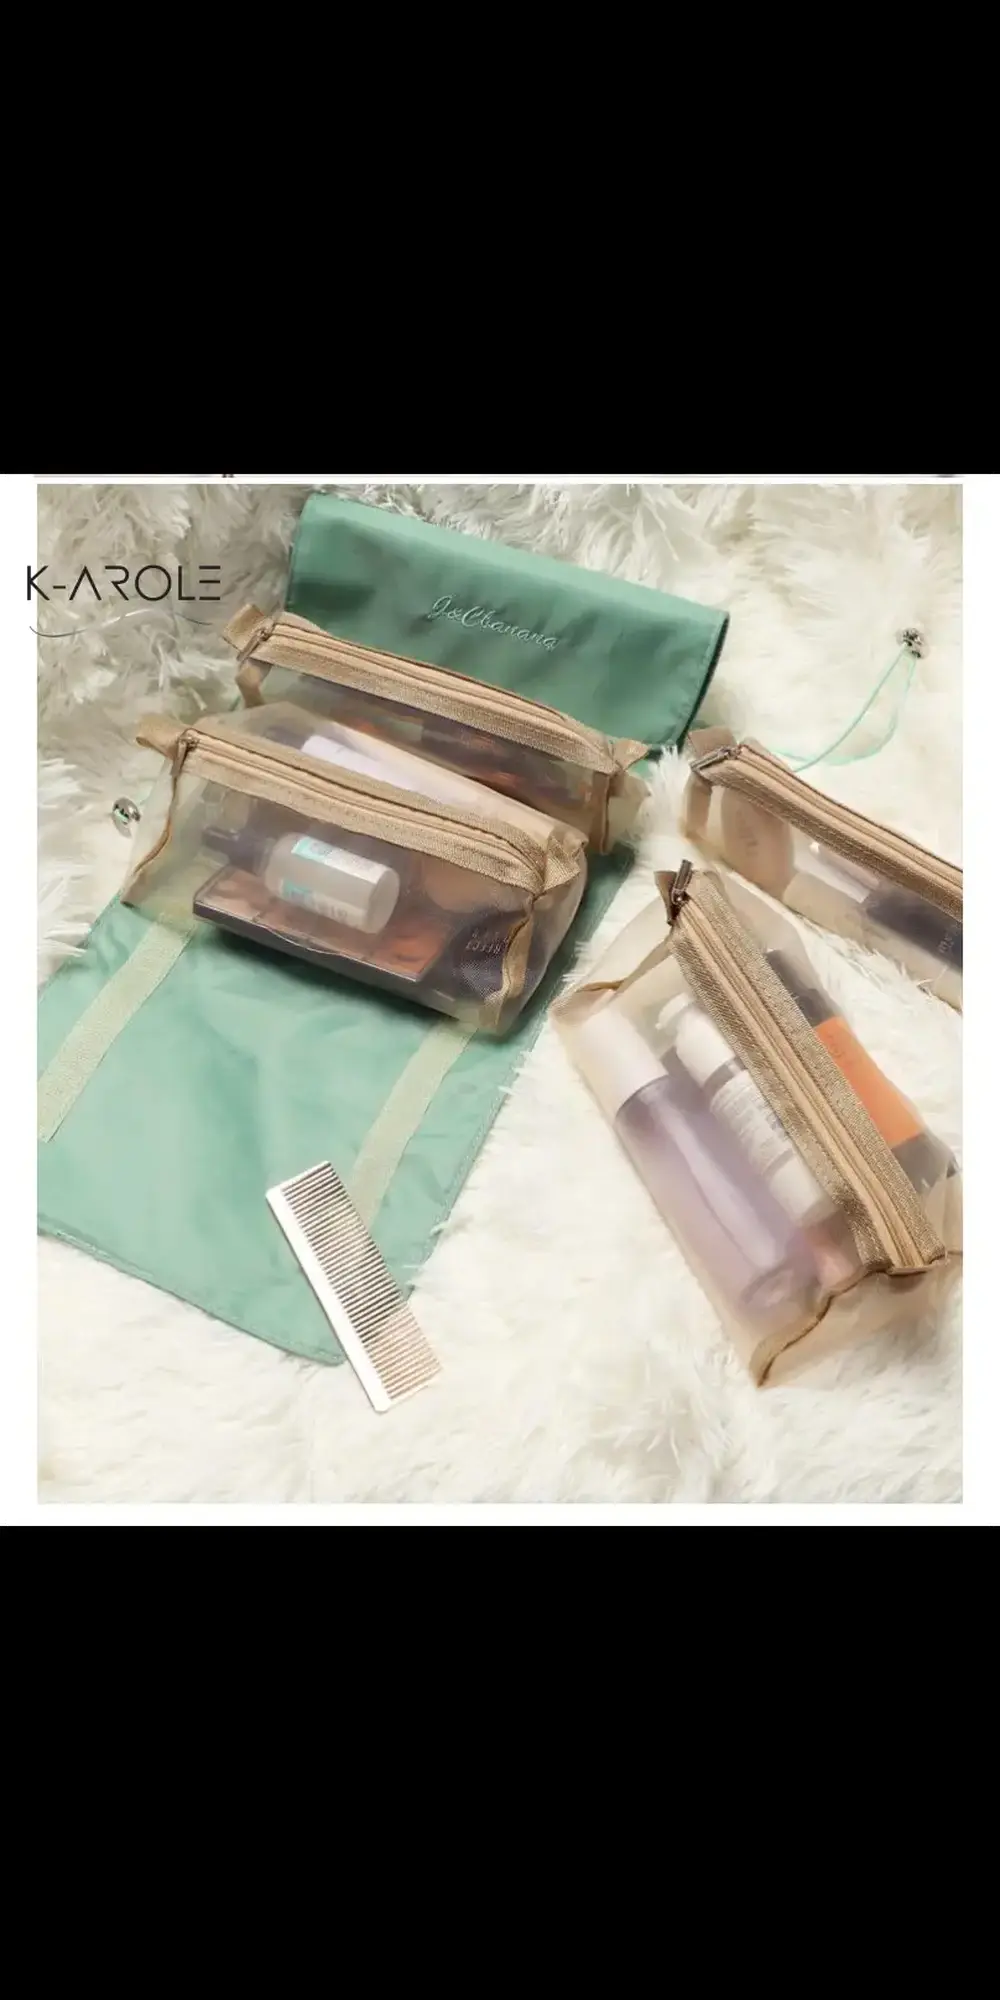 K-AROLE - Makeup Organizer Bag K-AROLE